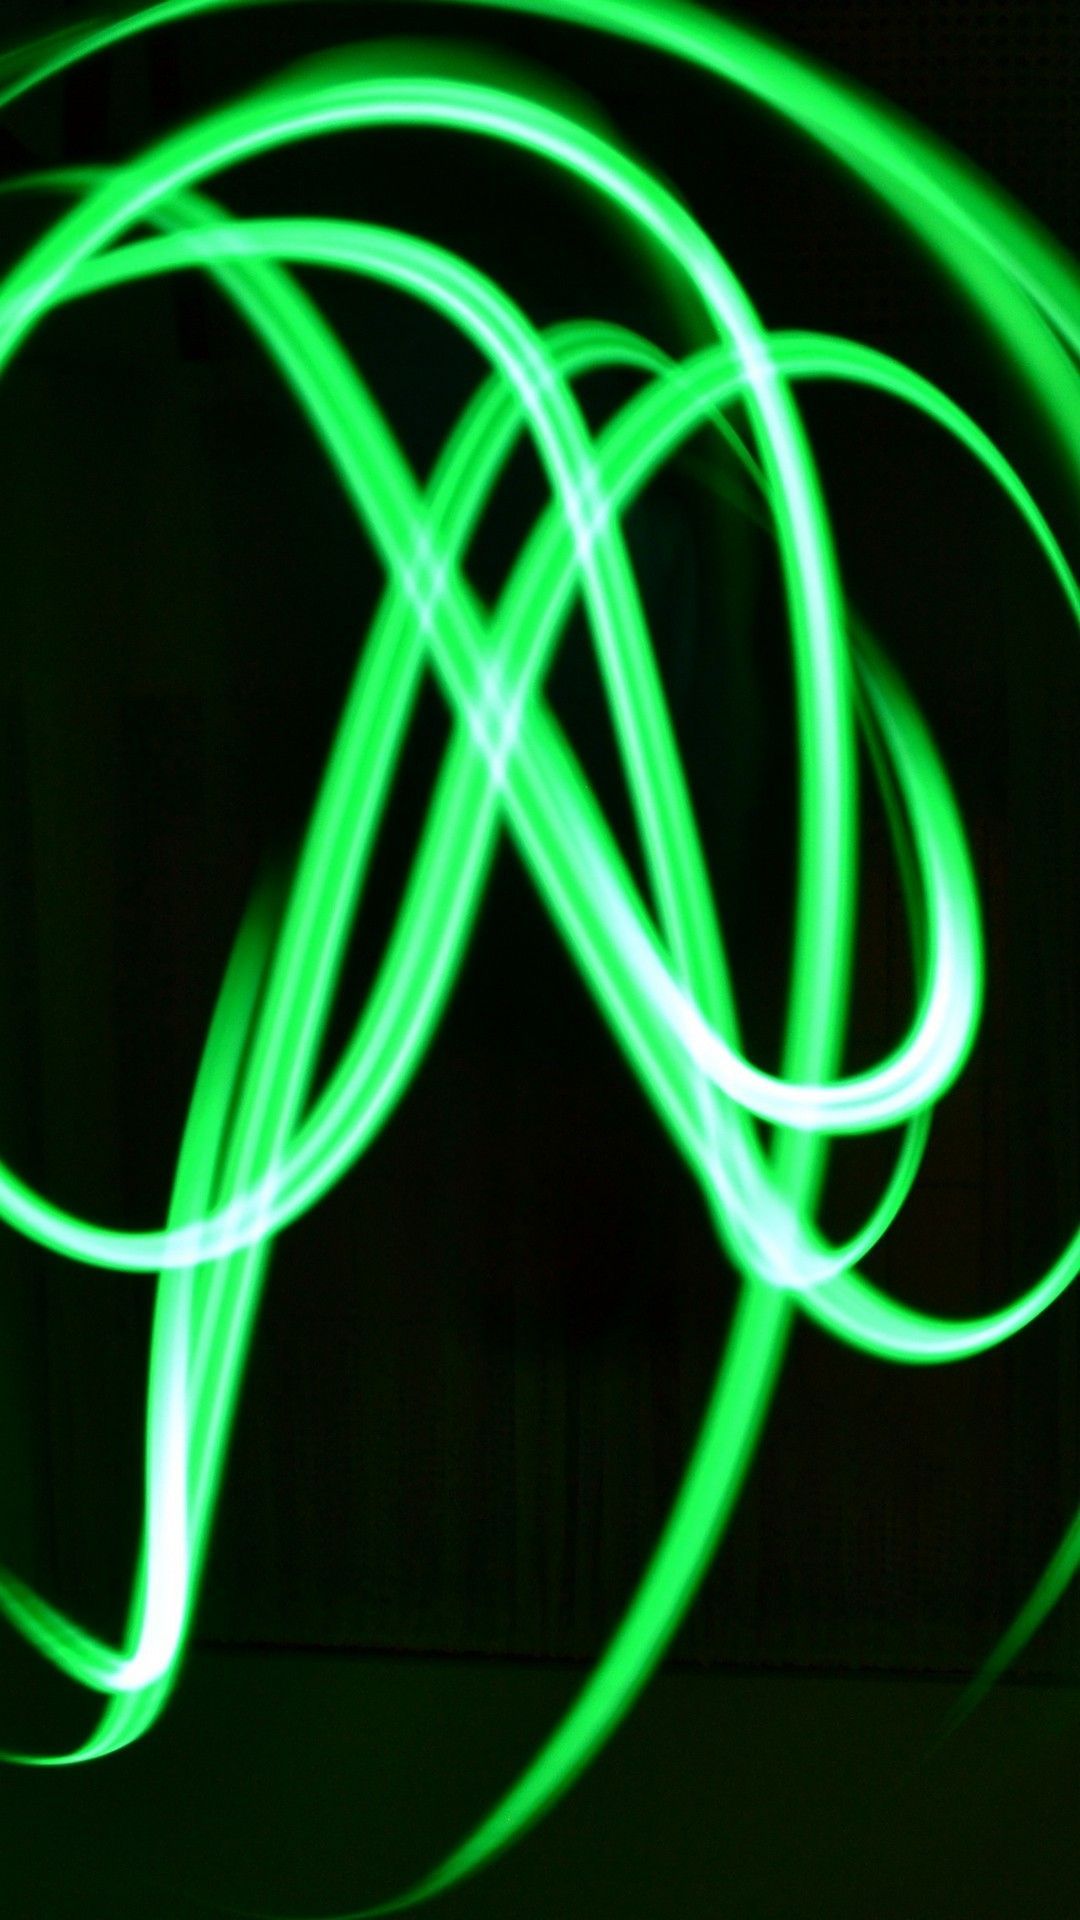 iPhone Wallpaper. Green, Light, Neon, Visual effect lighting